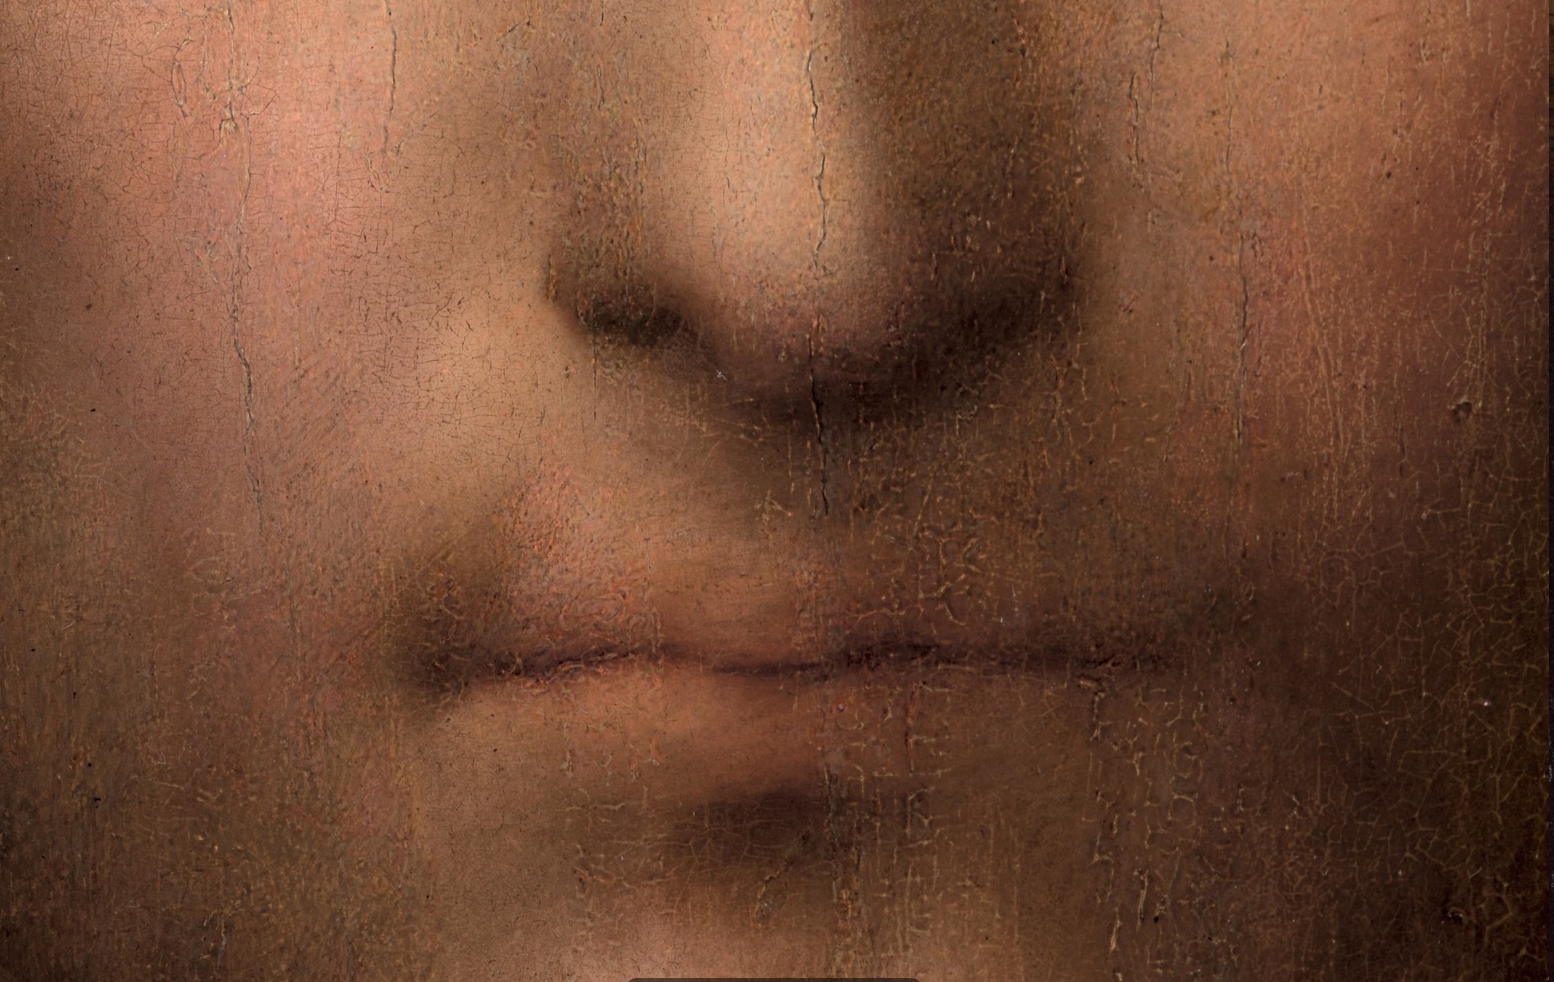 Leonardo+da+Vinci-1452-1519 (859).jpg